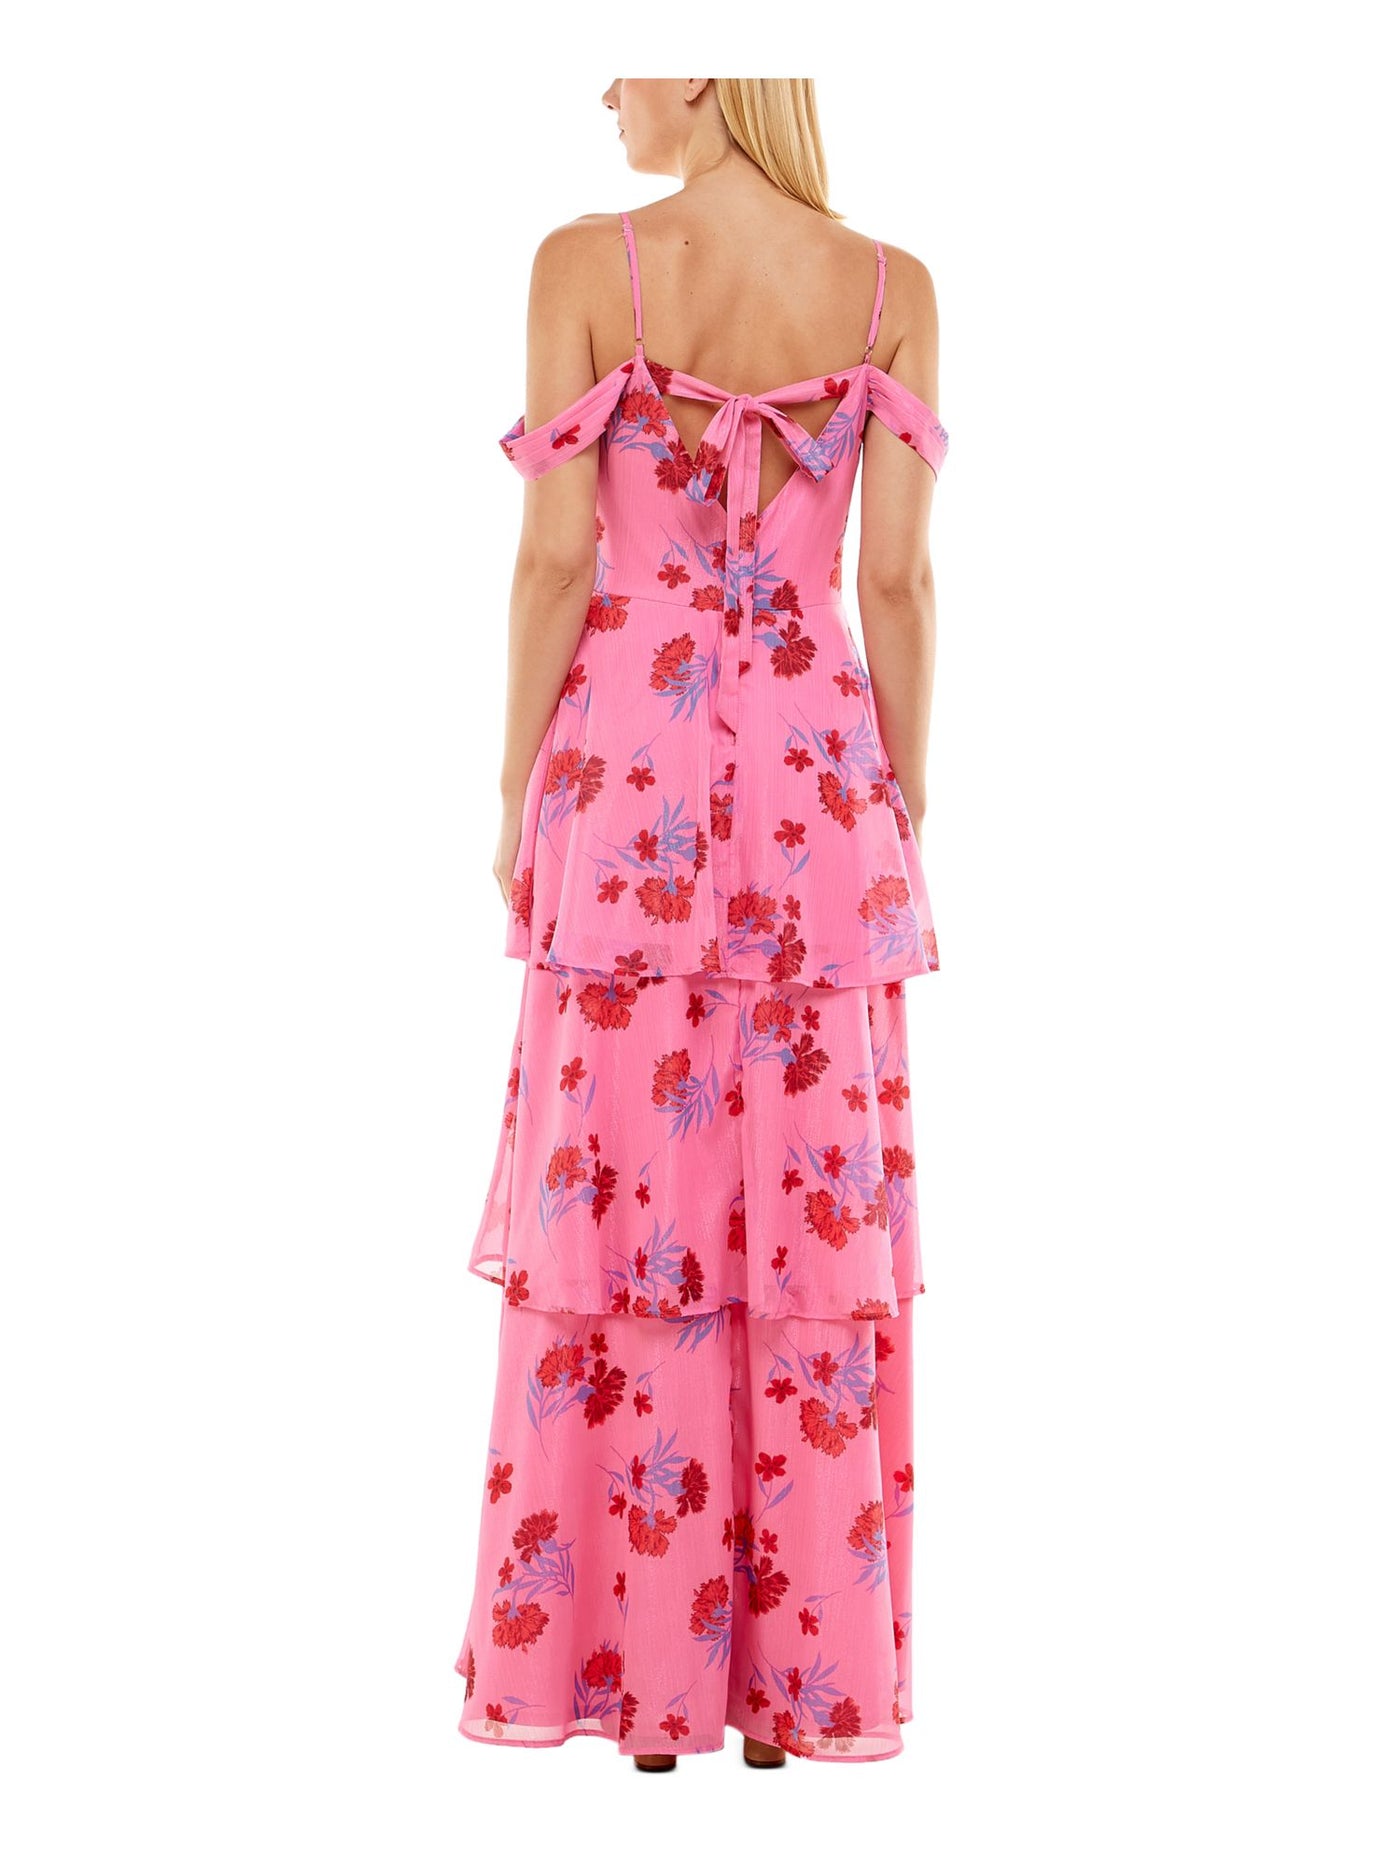 CRYSTAL DOLLS Womens Pink Cold Shoulder Zippered Adjustable Straps Tiered Floral Sleeveless V Neck Maxi Cocktail Dress Juniors 3